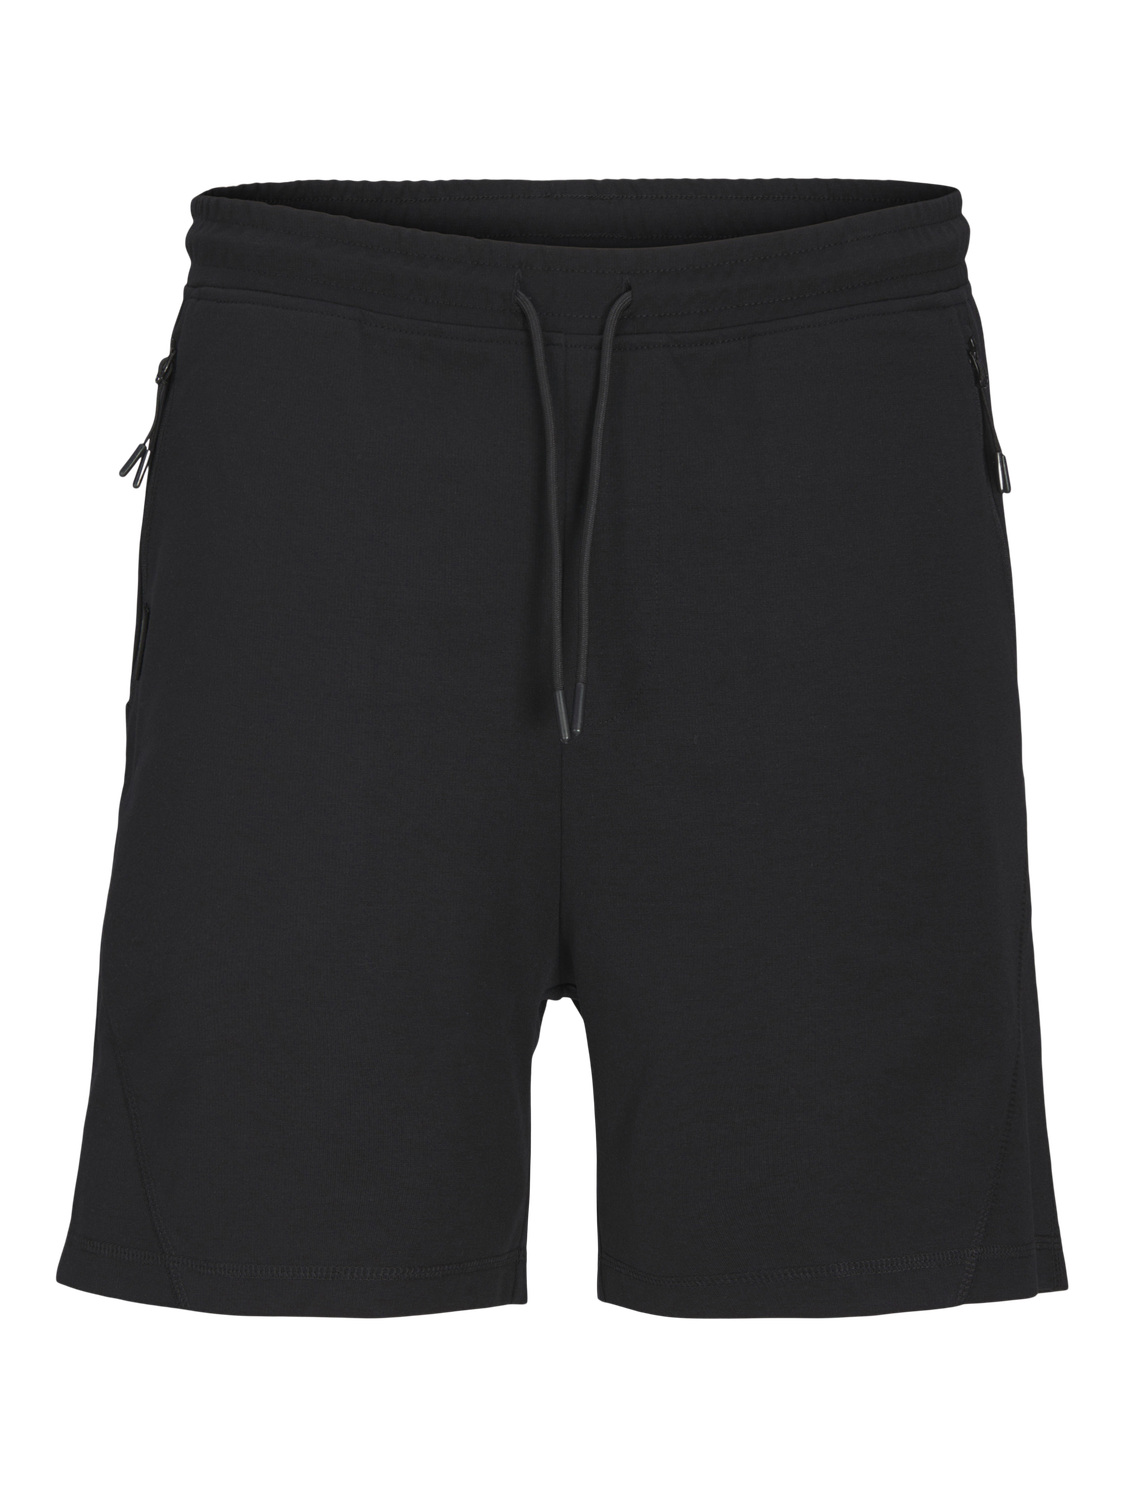 Jack & Jones Plus Size Tight Fit Sweat shorts -Black - 12257068